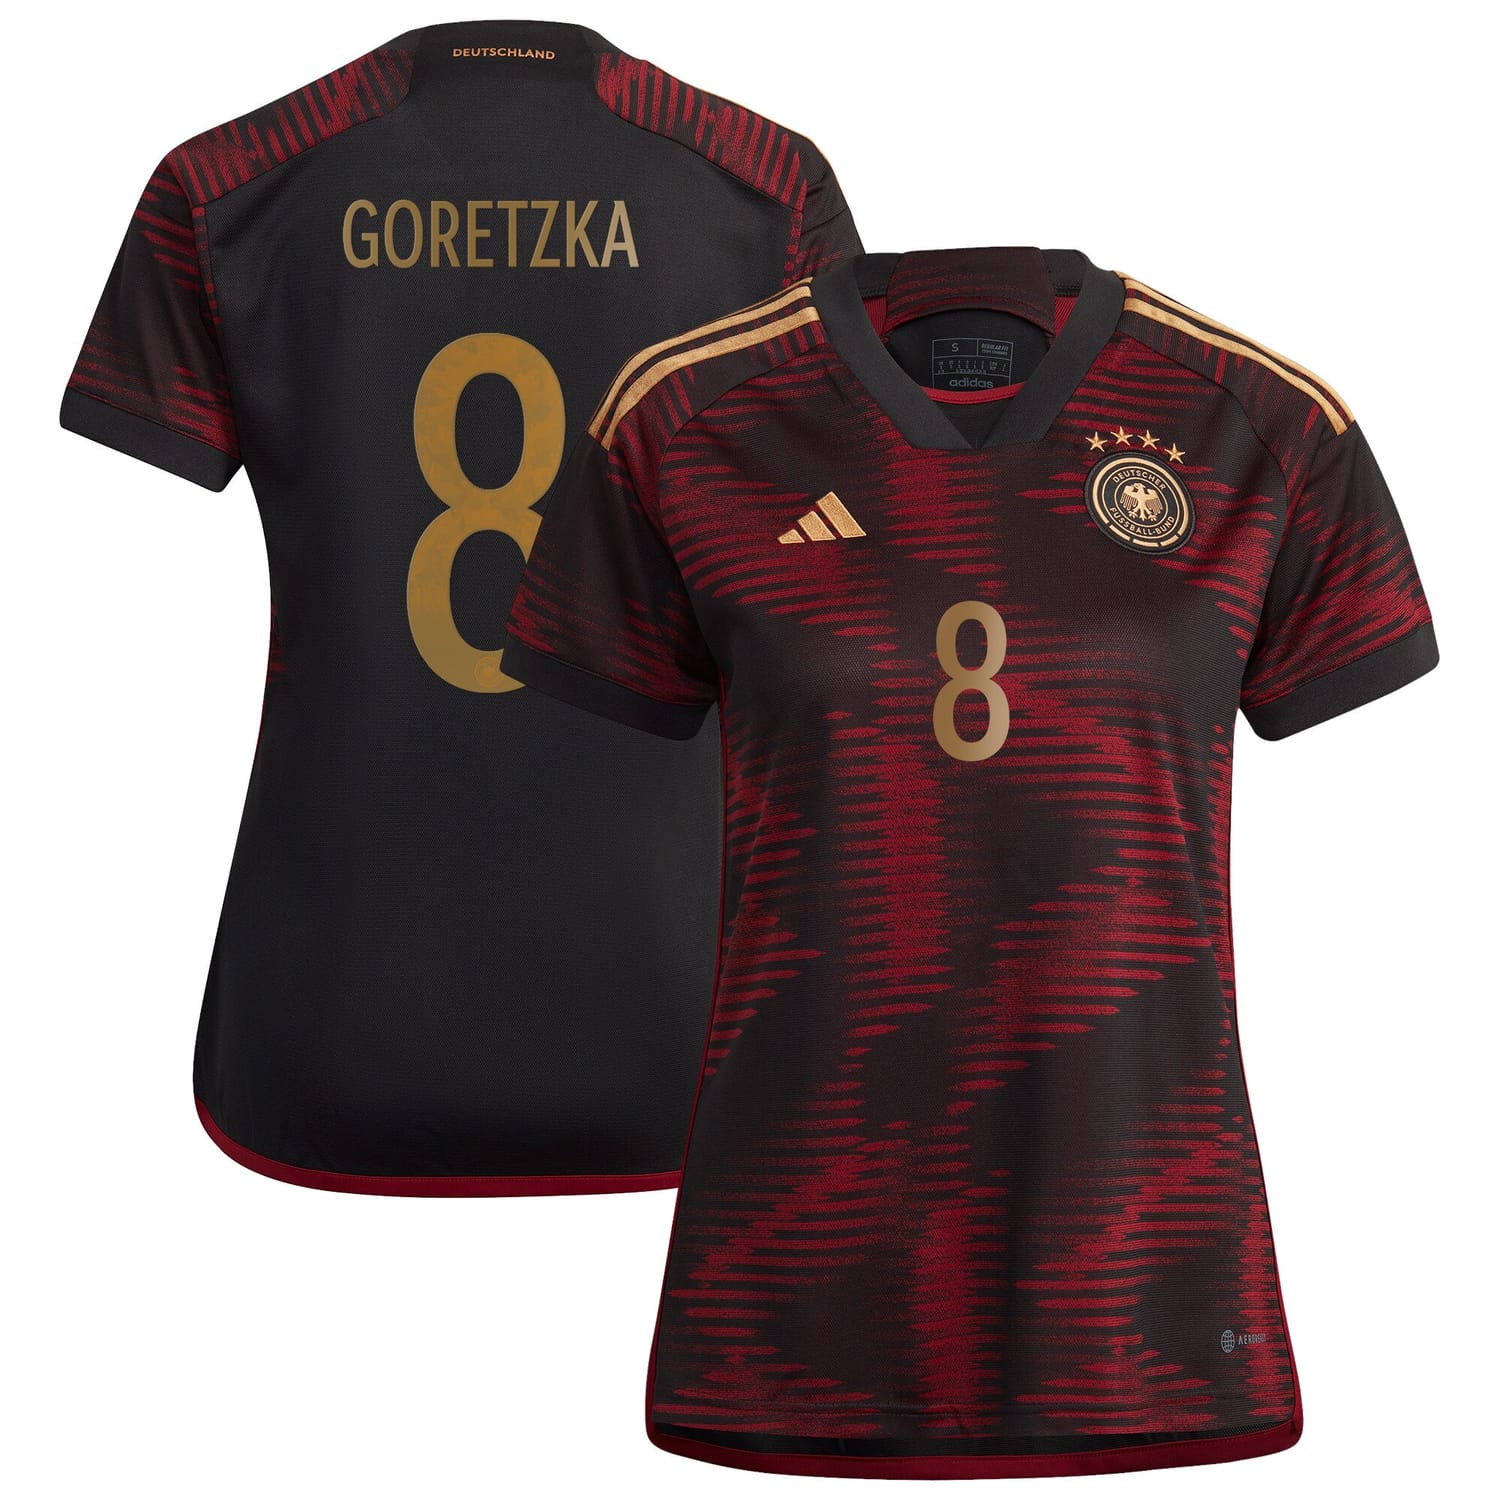 Germany National Team Away Jersey Shirt player Leon Goretzka 8 printing for Women